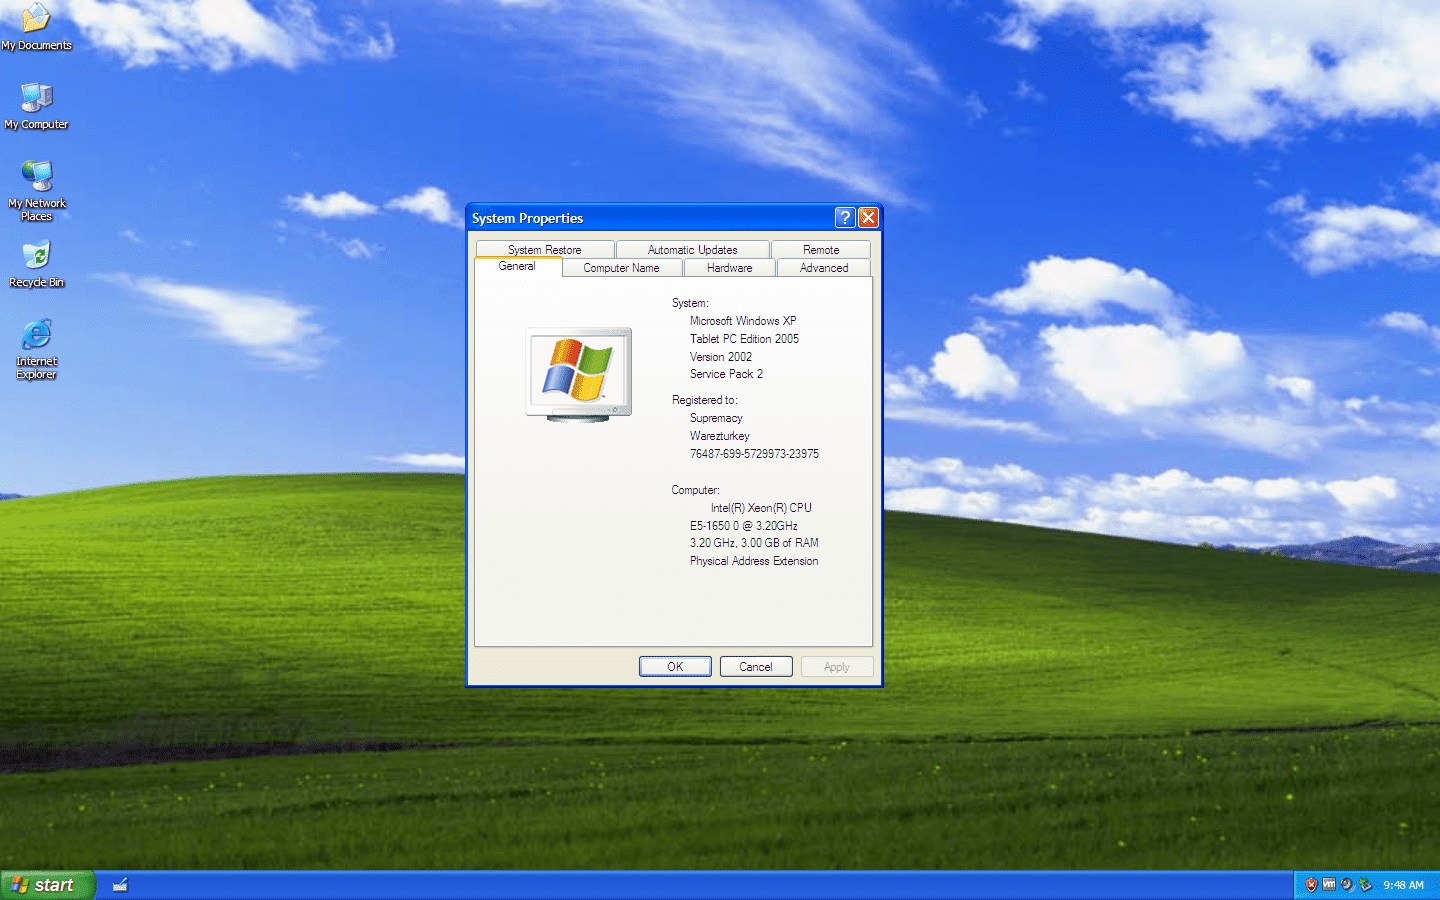 windows xp tablet pc edition 2005 msdn sp3